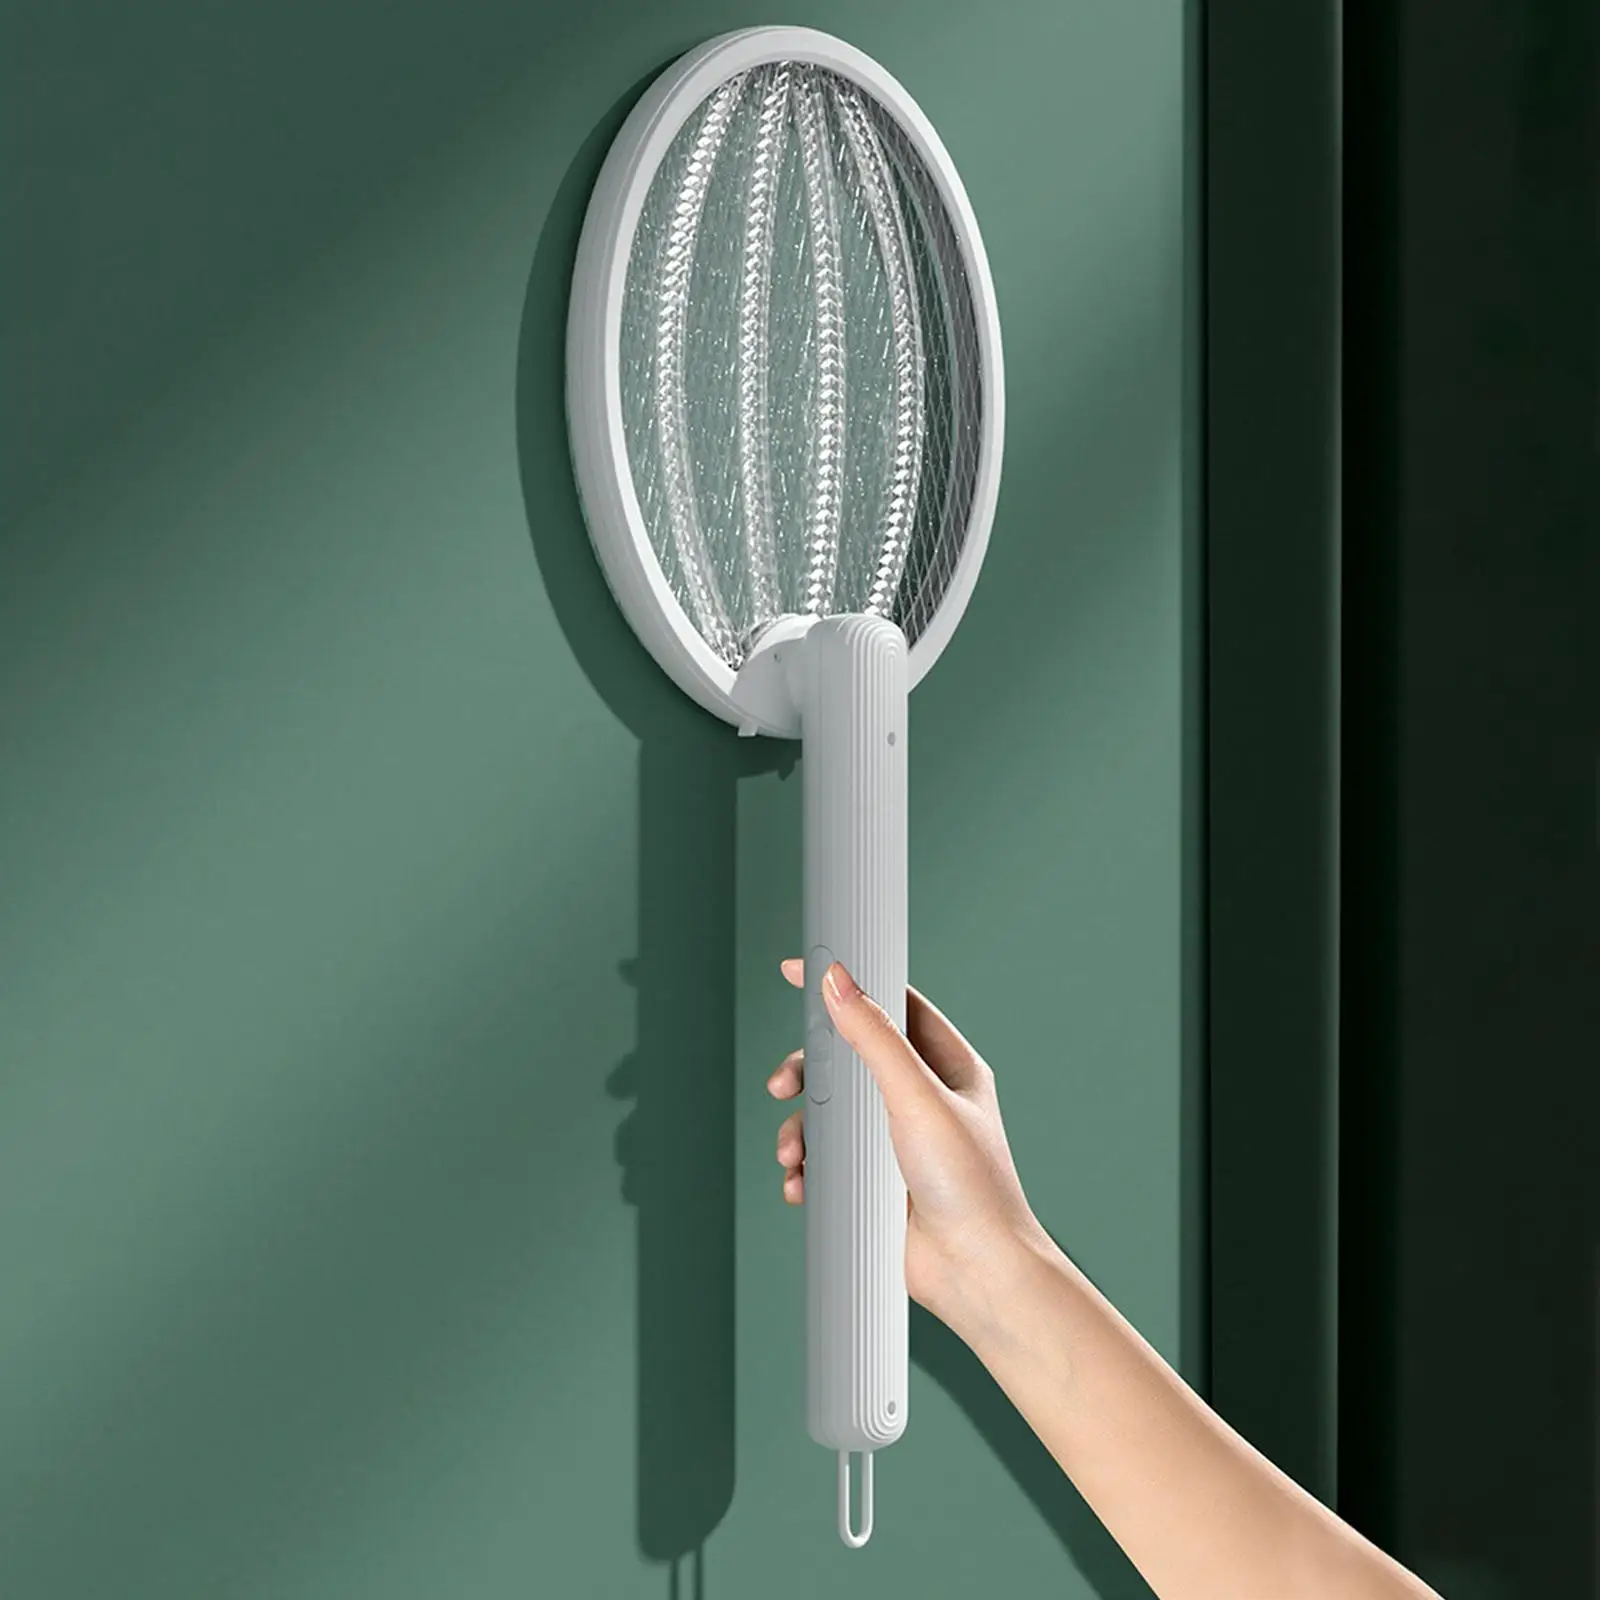 Fly Swatter Folding Night Lamp  Mesh for Office, Household, Kitchen,